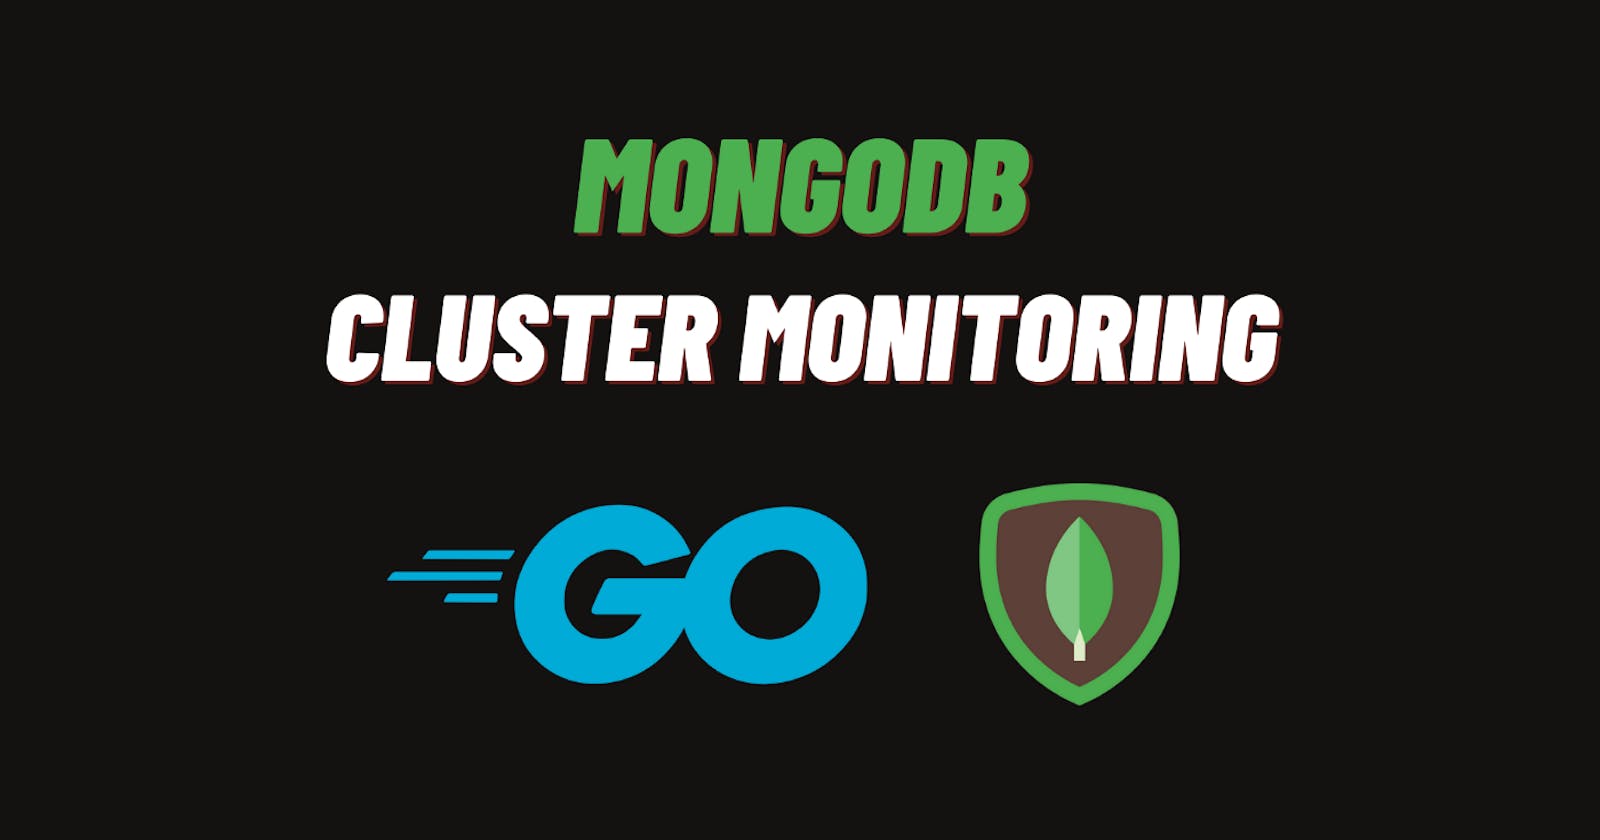 MongoDB Cluster Monitoring in Go